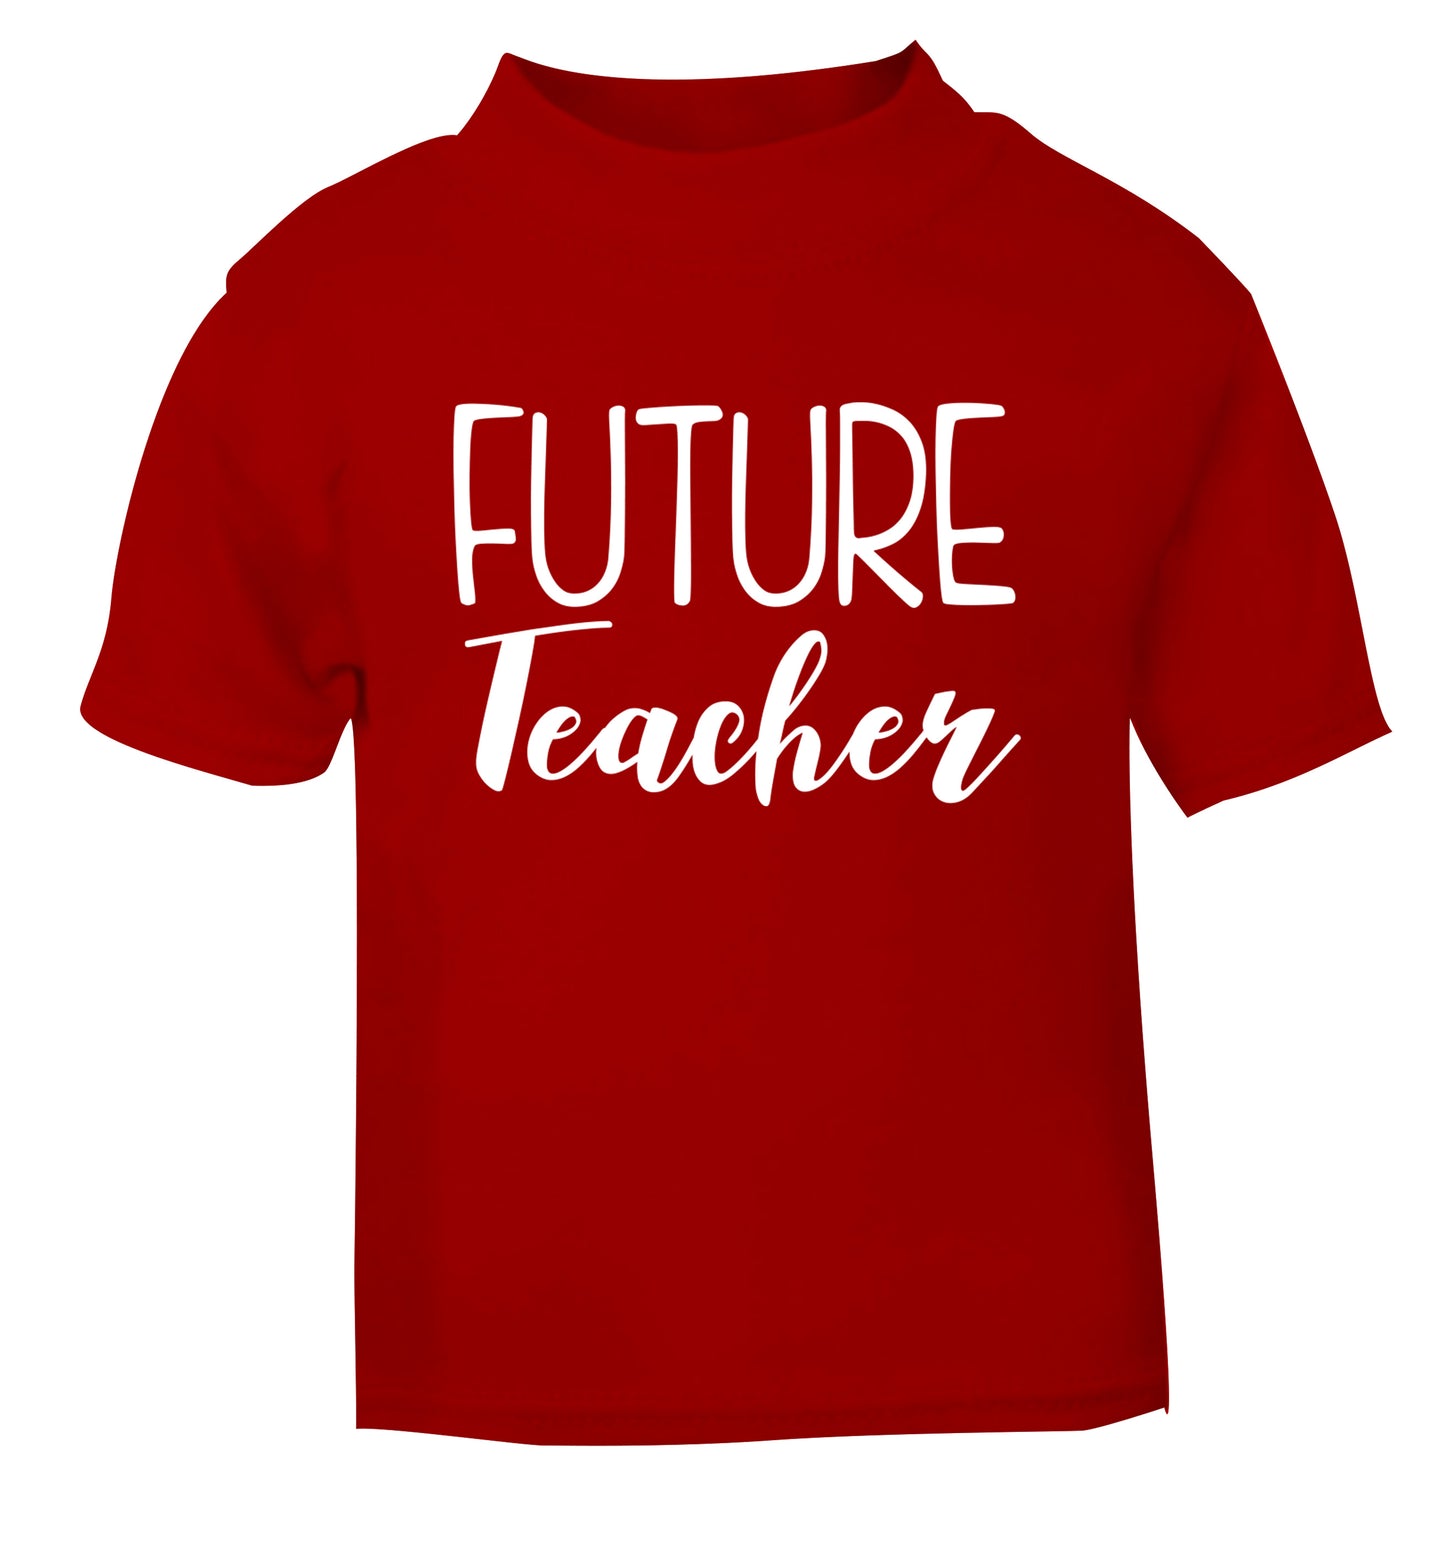 Future teacher red Baby Toddler Tshirt 2 Years